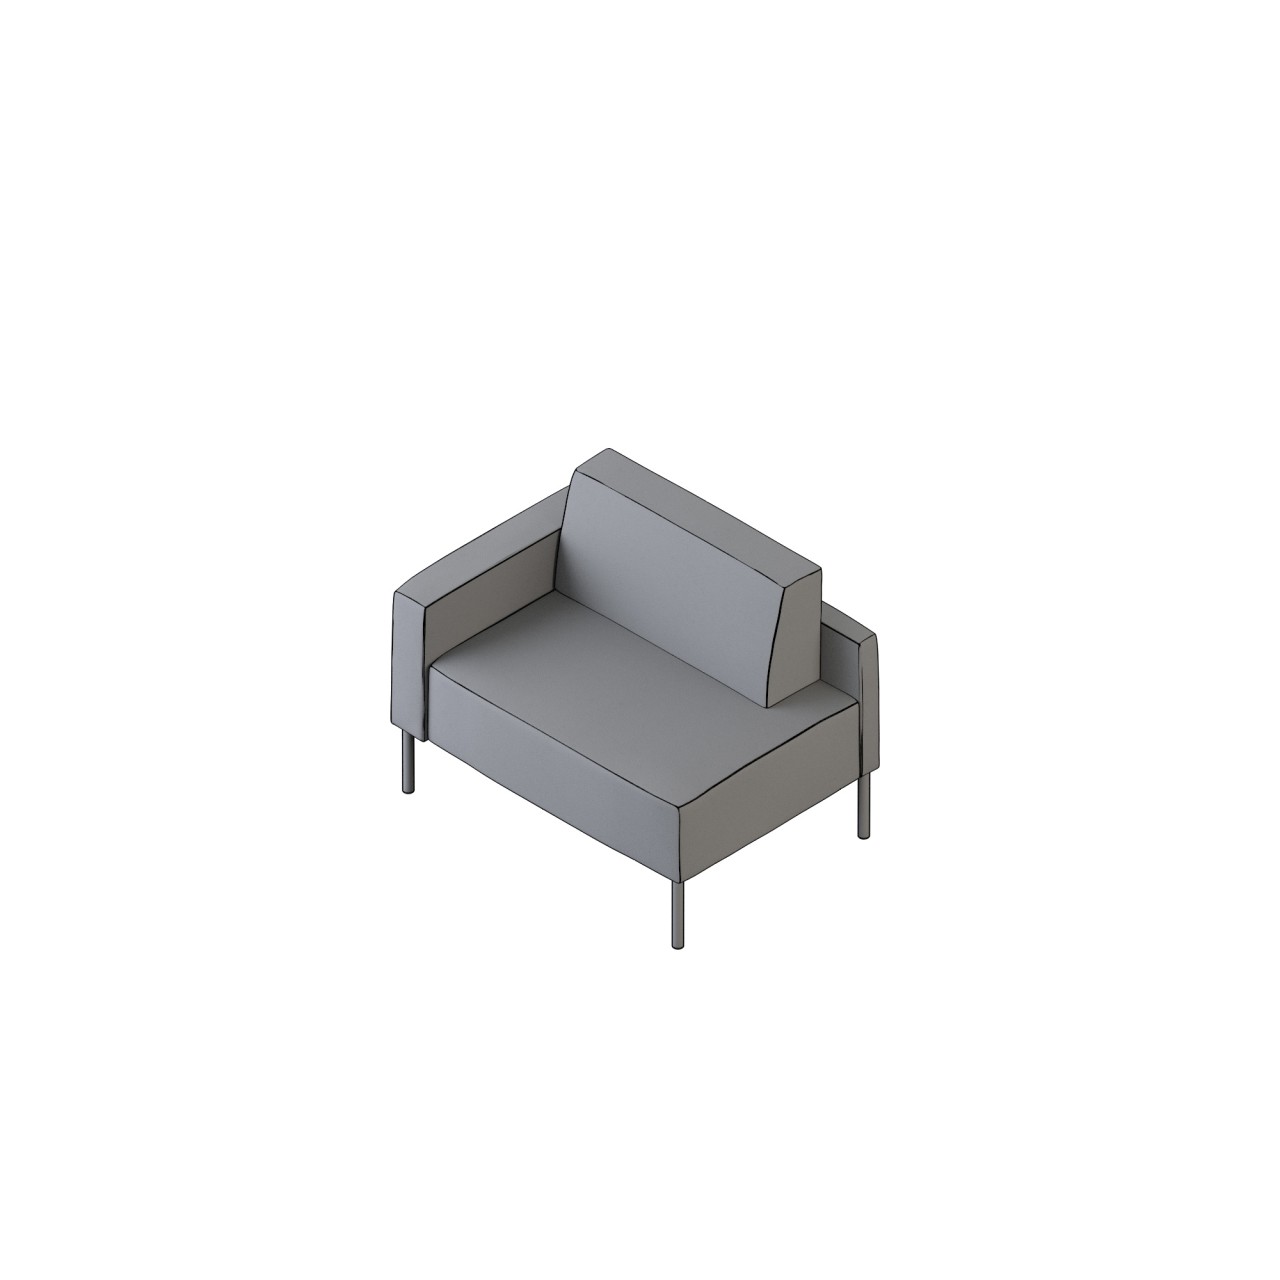 mozzo lounge/modular - 62017R
COM  5.5 COL 110